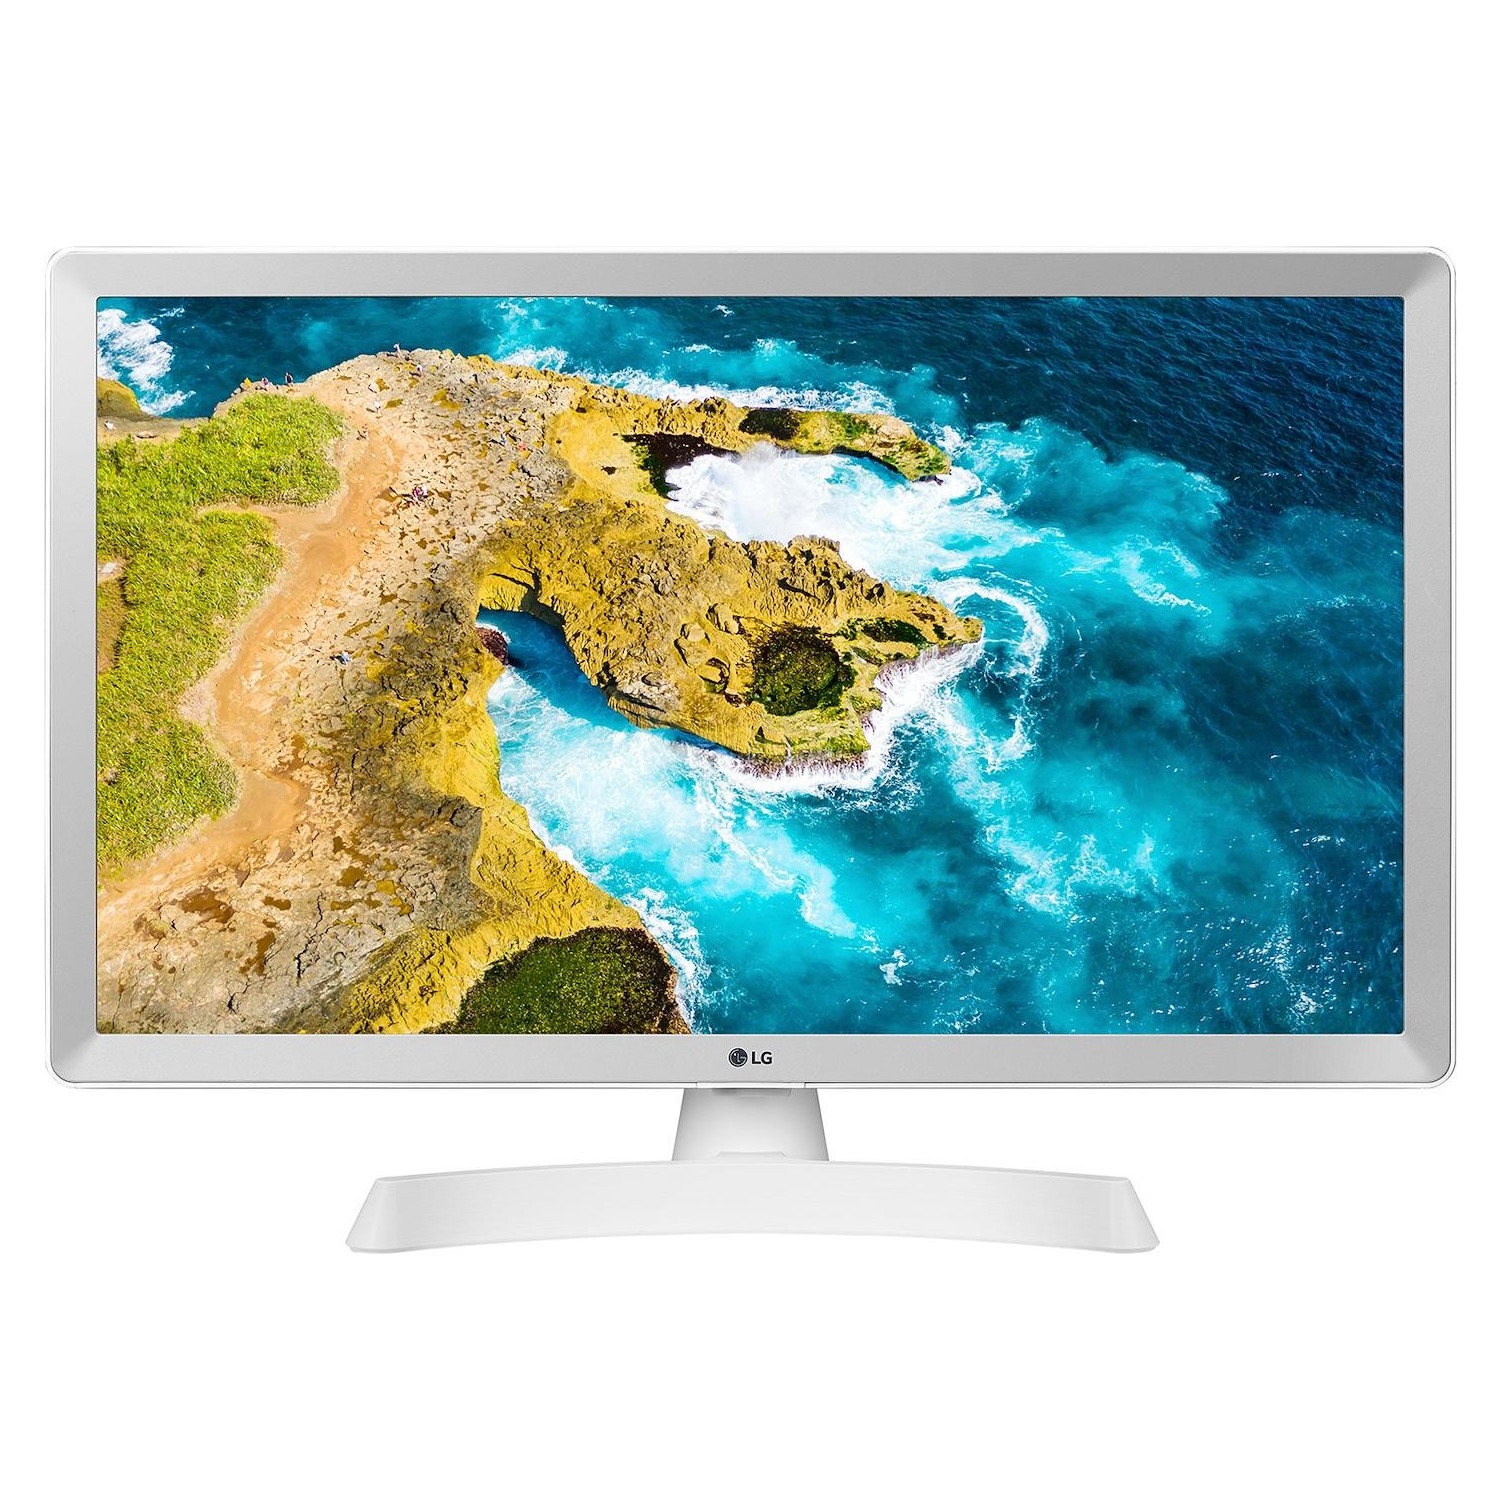 Immagine per TV LED Monitor Smart LG 24TQ510S-WZ bianco da DIMOStore